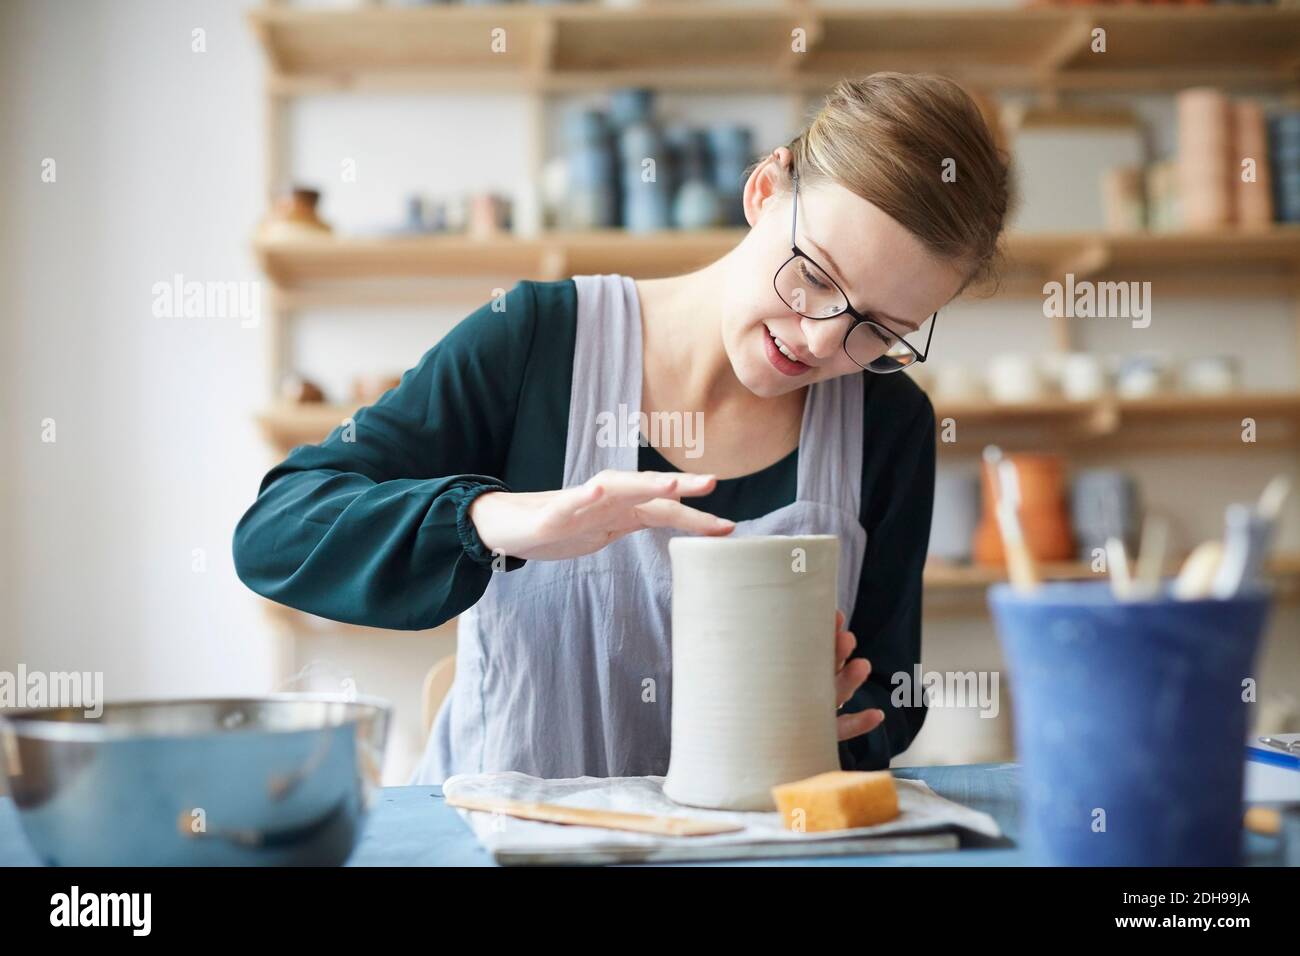 Young woman molding pot in art class Stock Photo